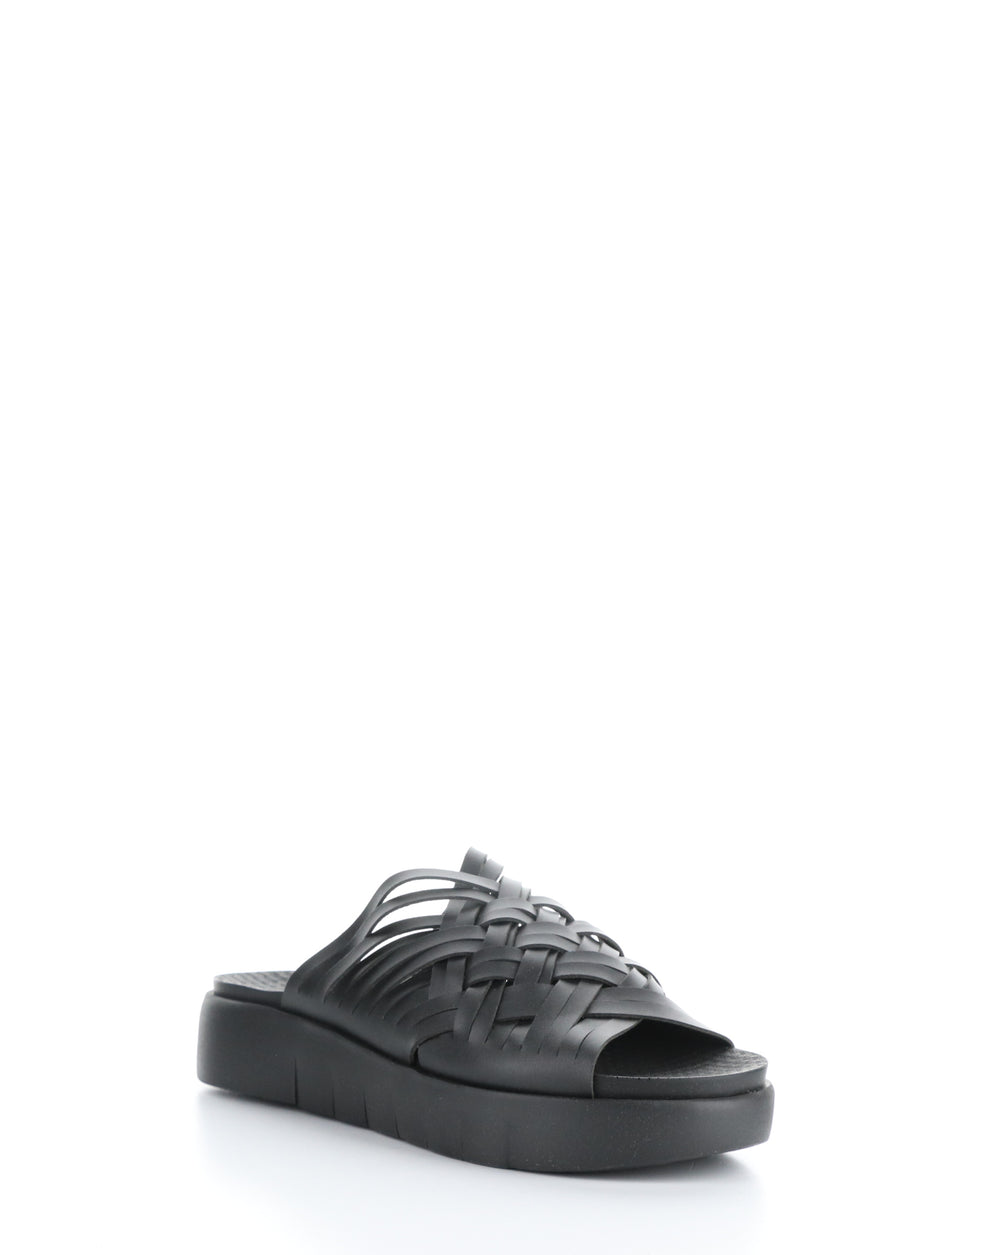 RISED BLACK Slip-on Sandals